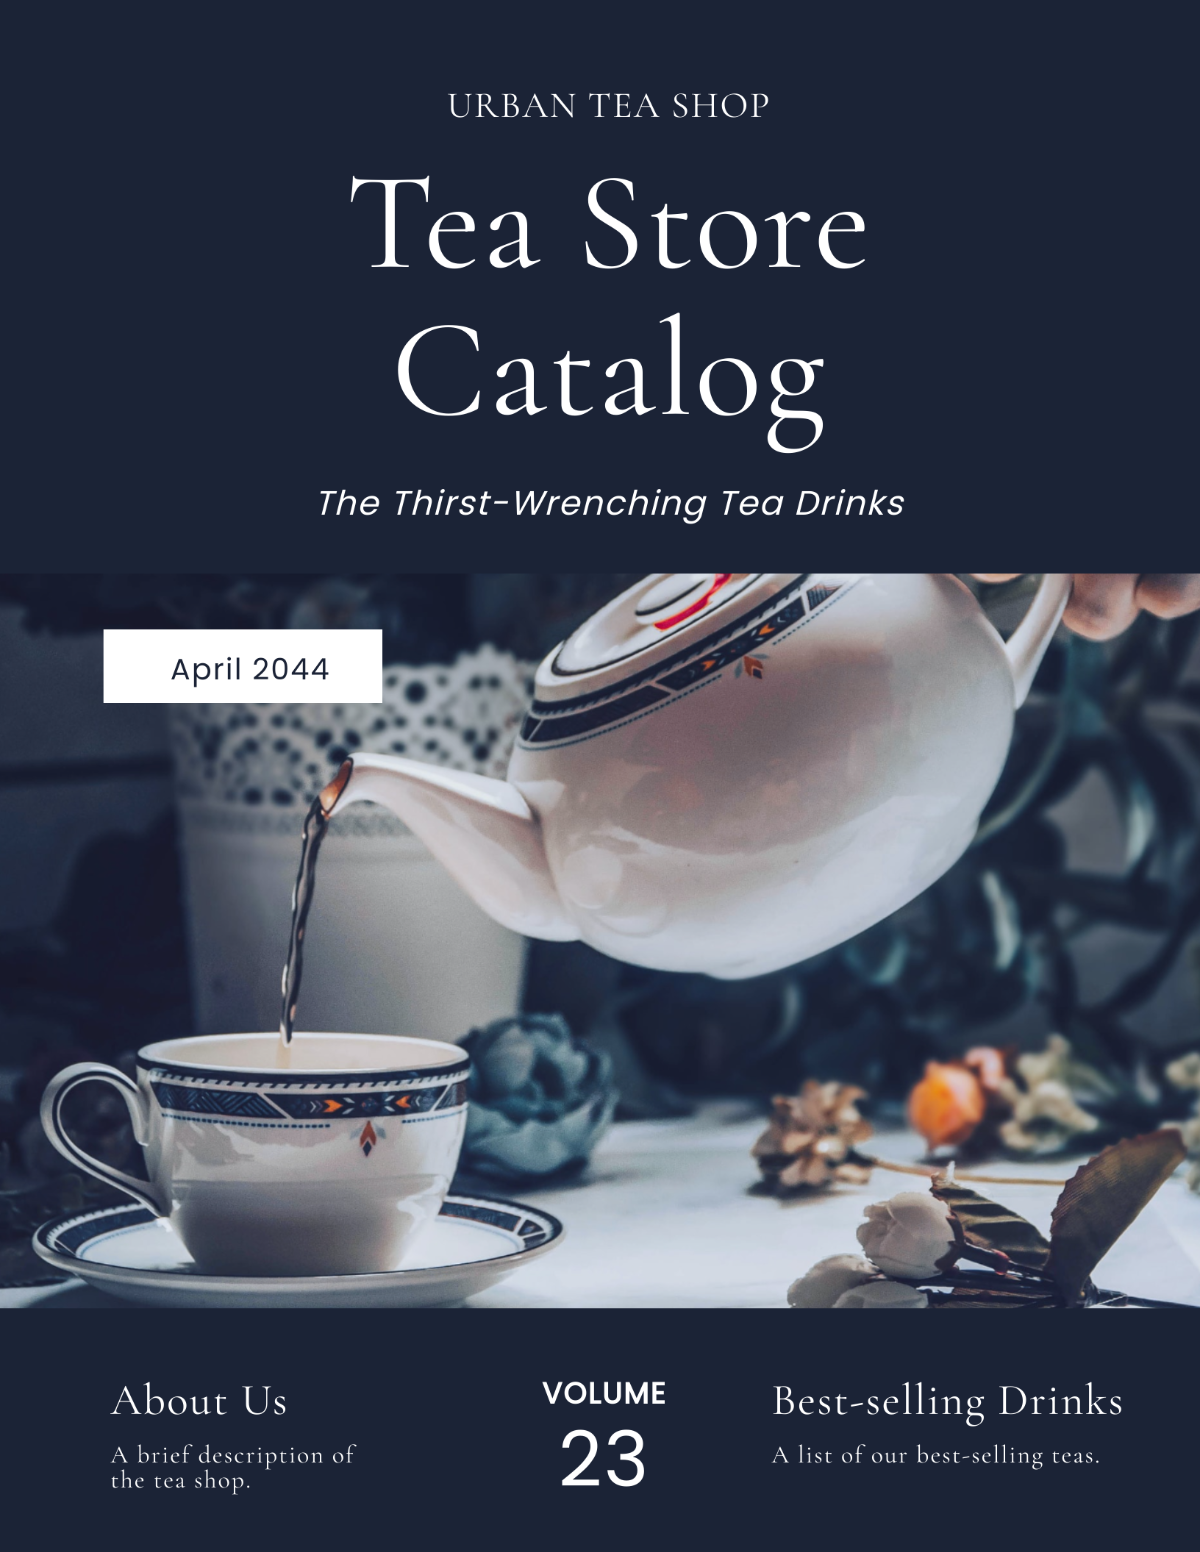 Tea Store Catalog Template